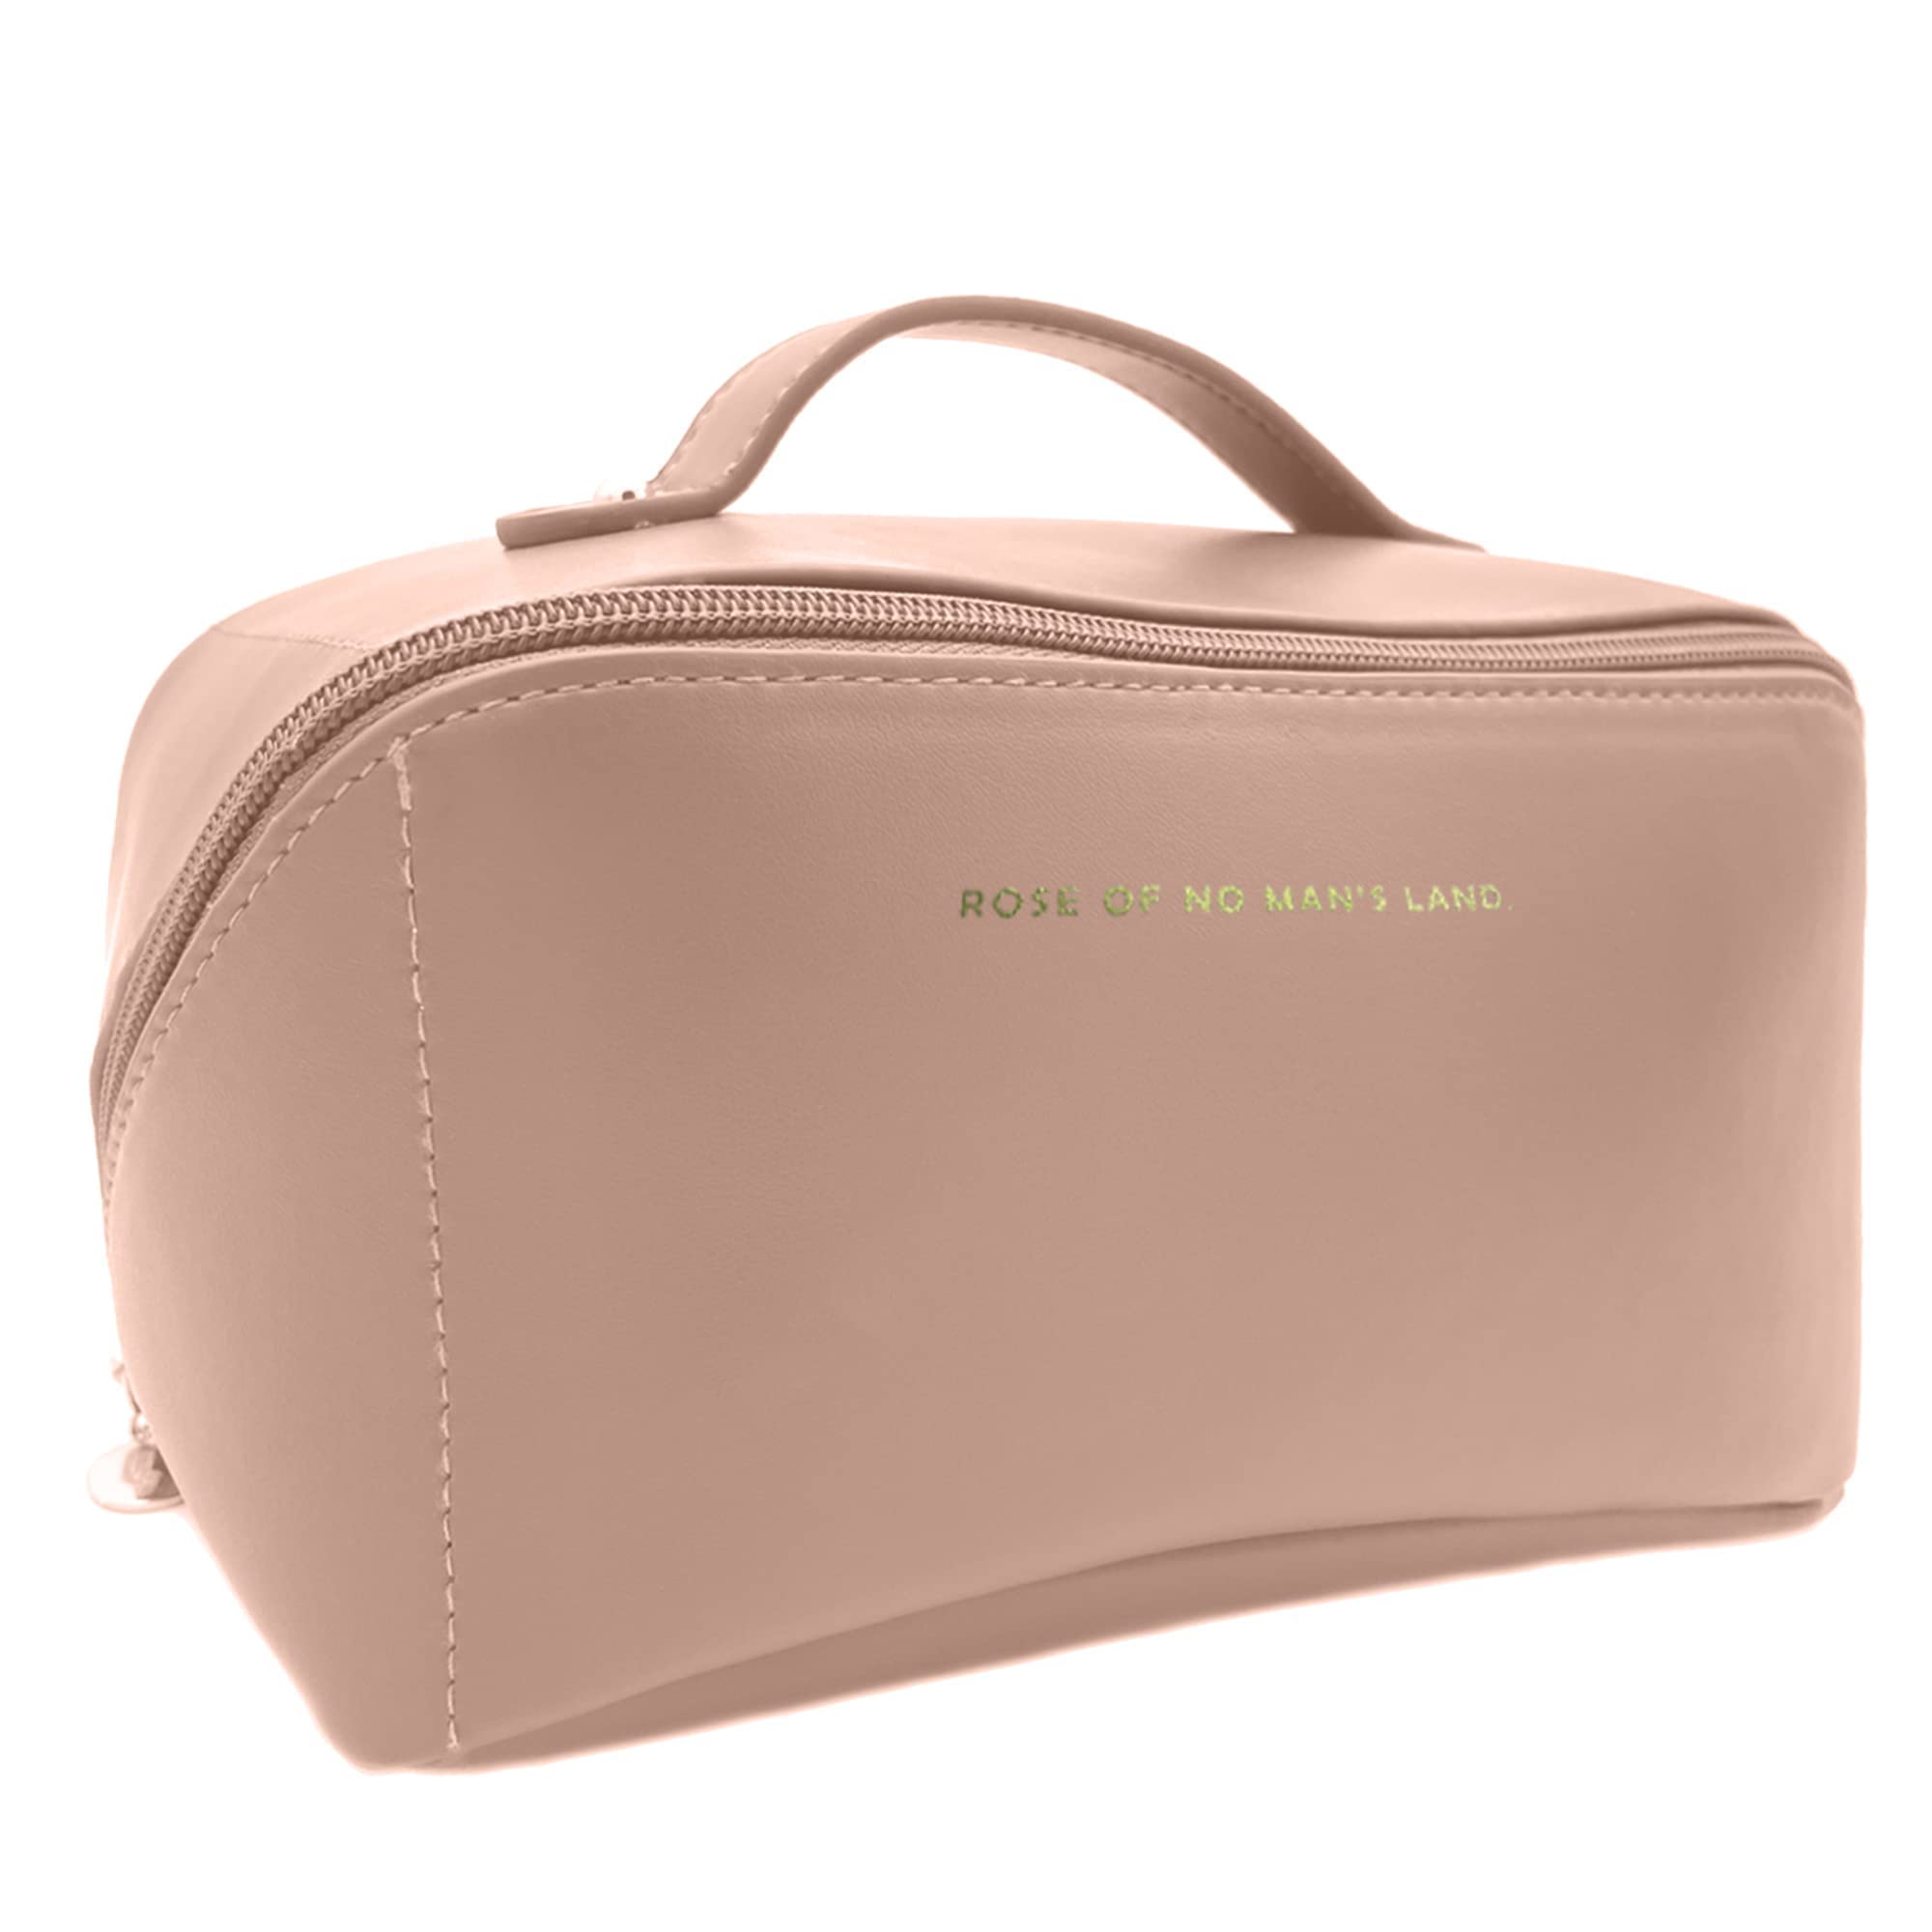 PU Leather Zipper Makeup Bag Large Capacity Checkered Cosmetic Bag